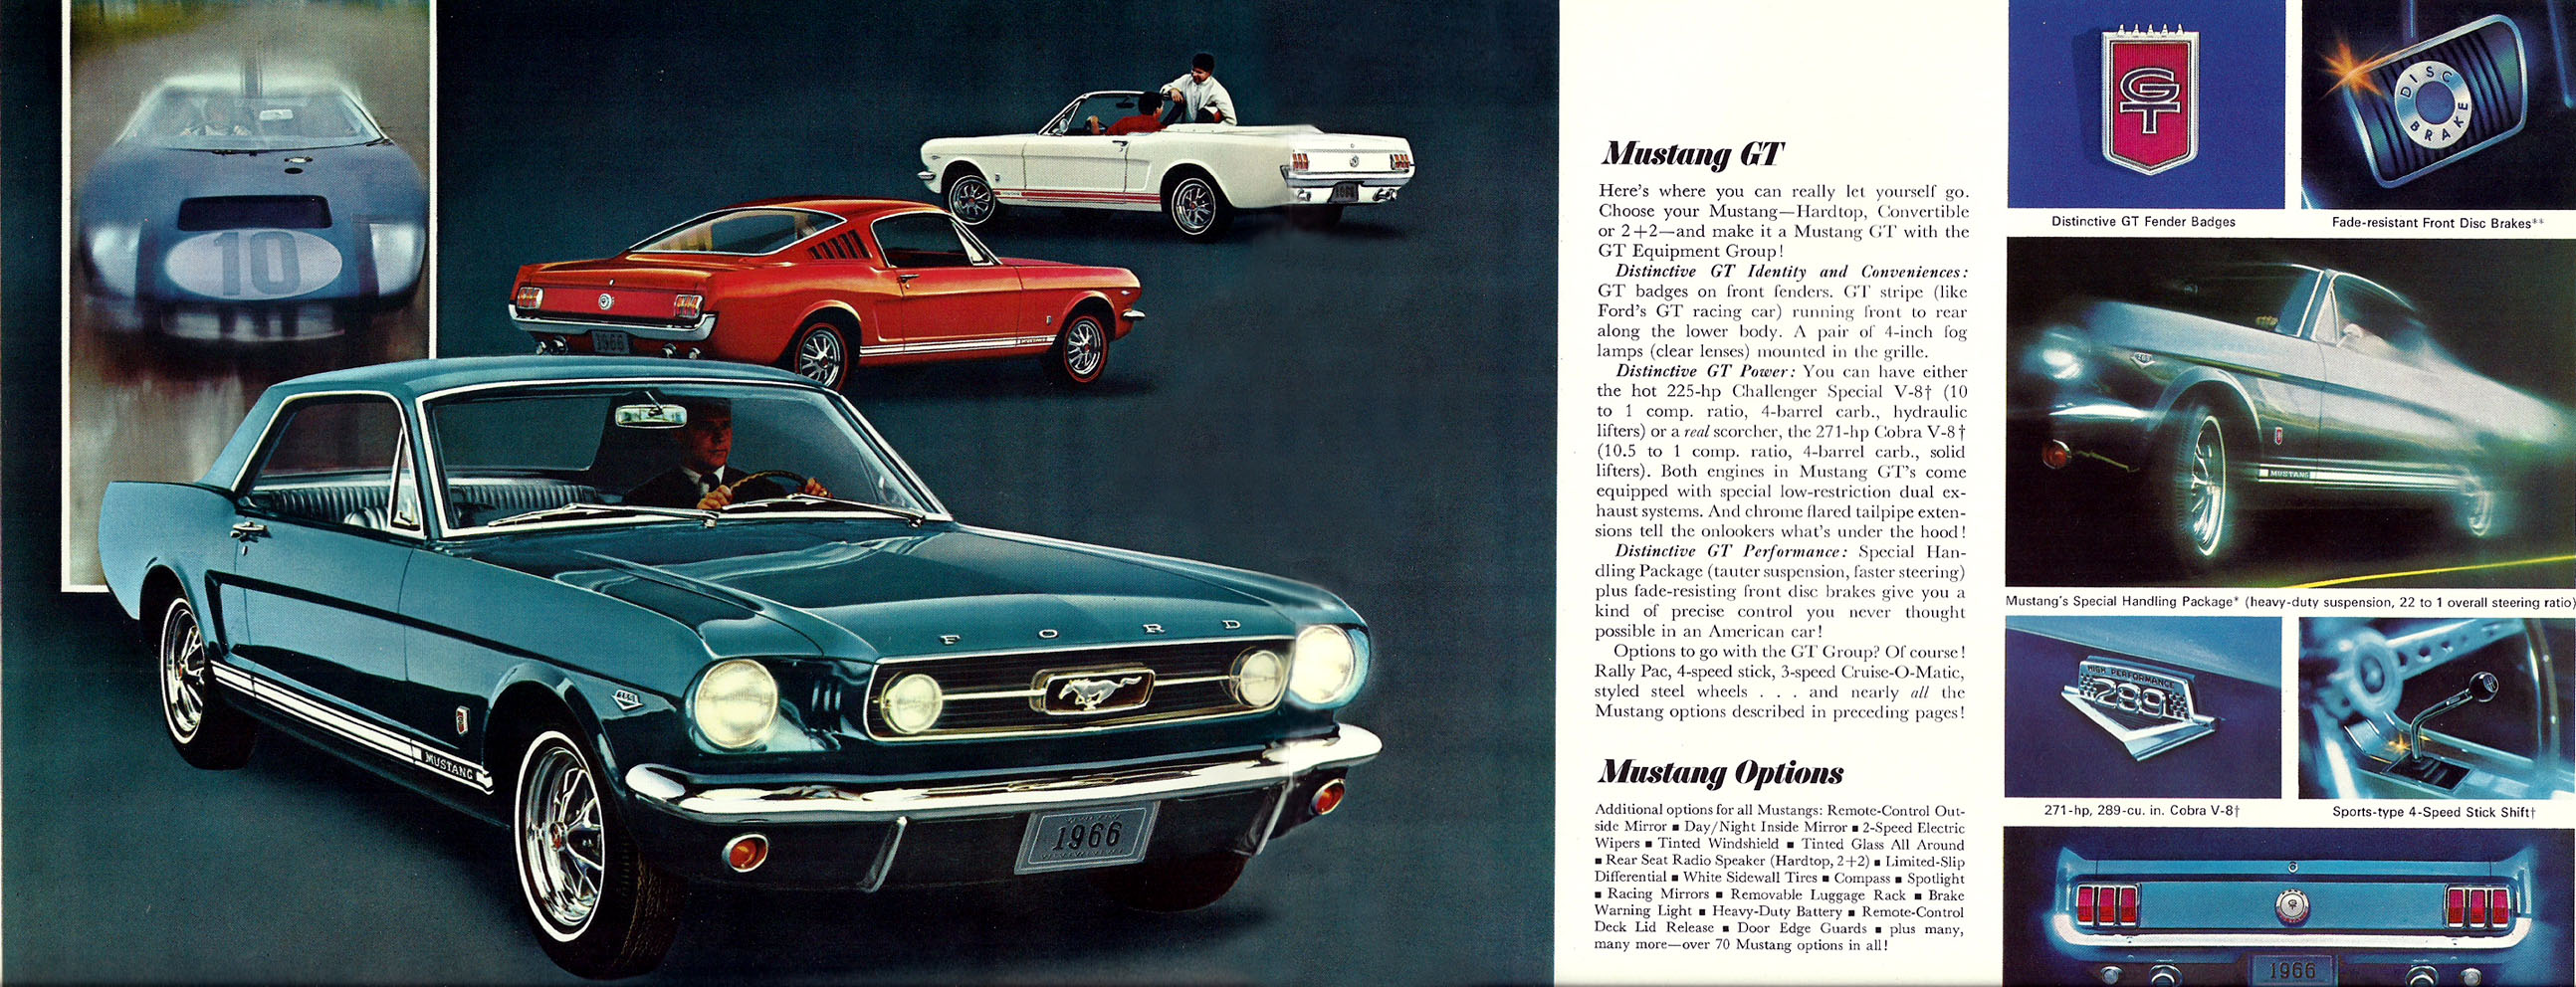 1966 Mustang Prospekt Page 10-11